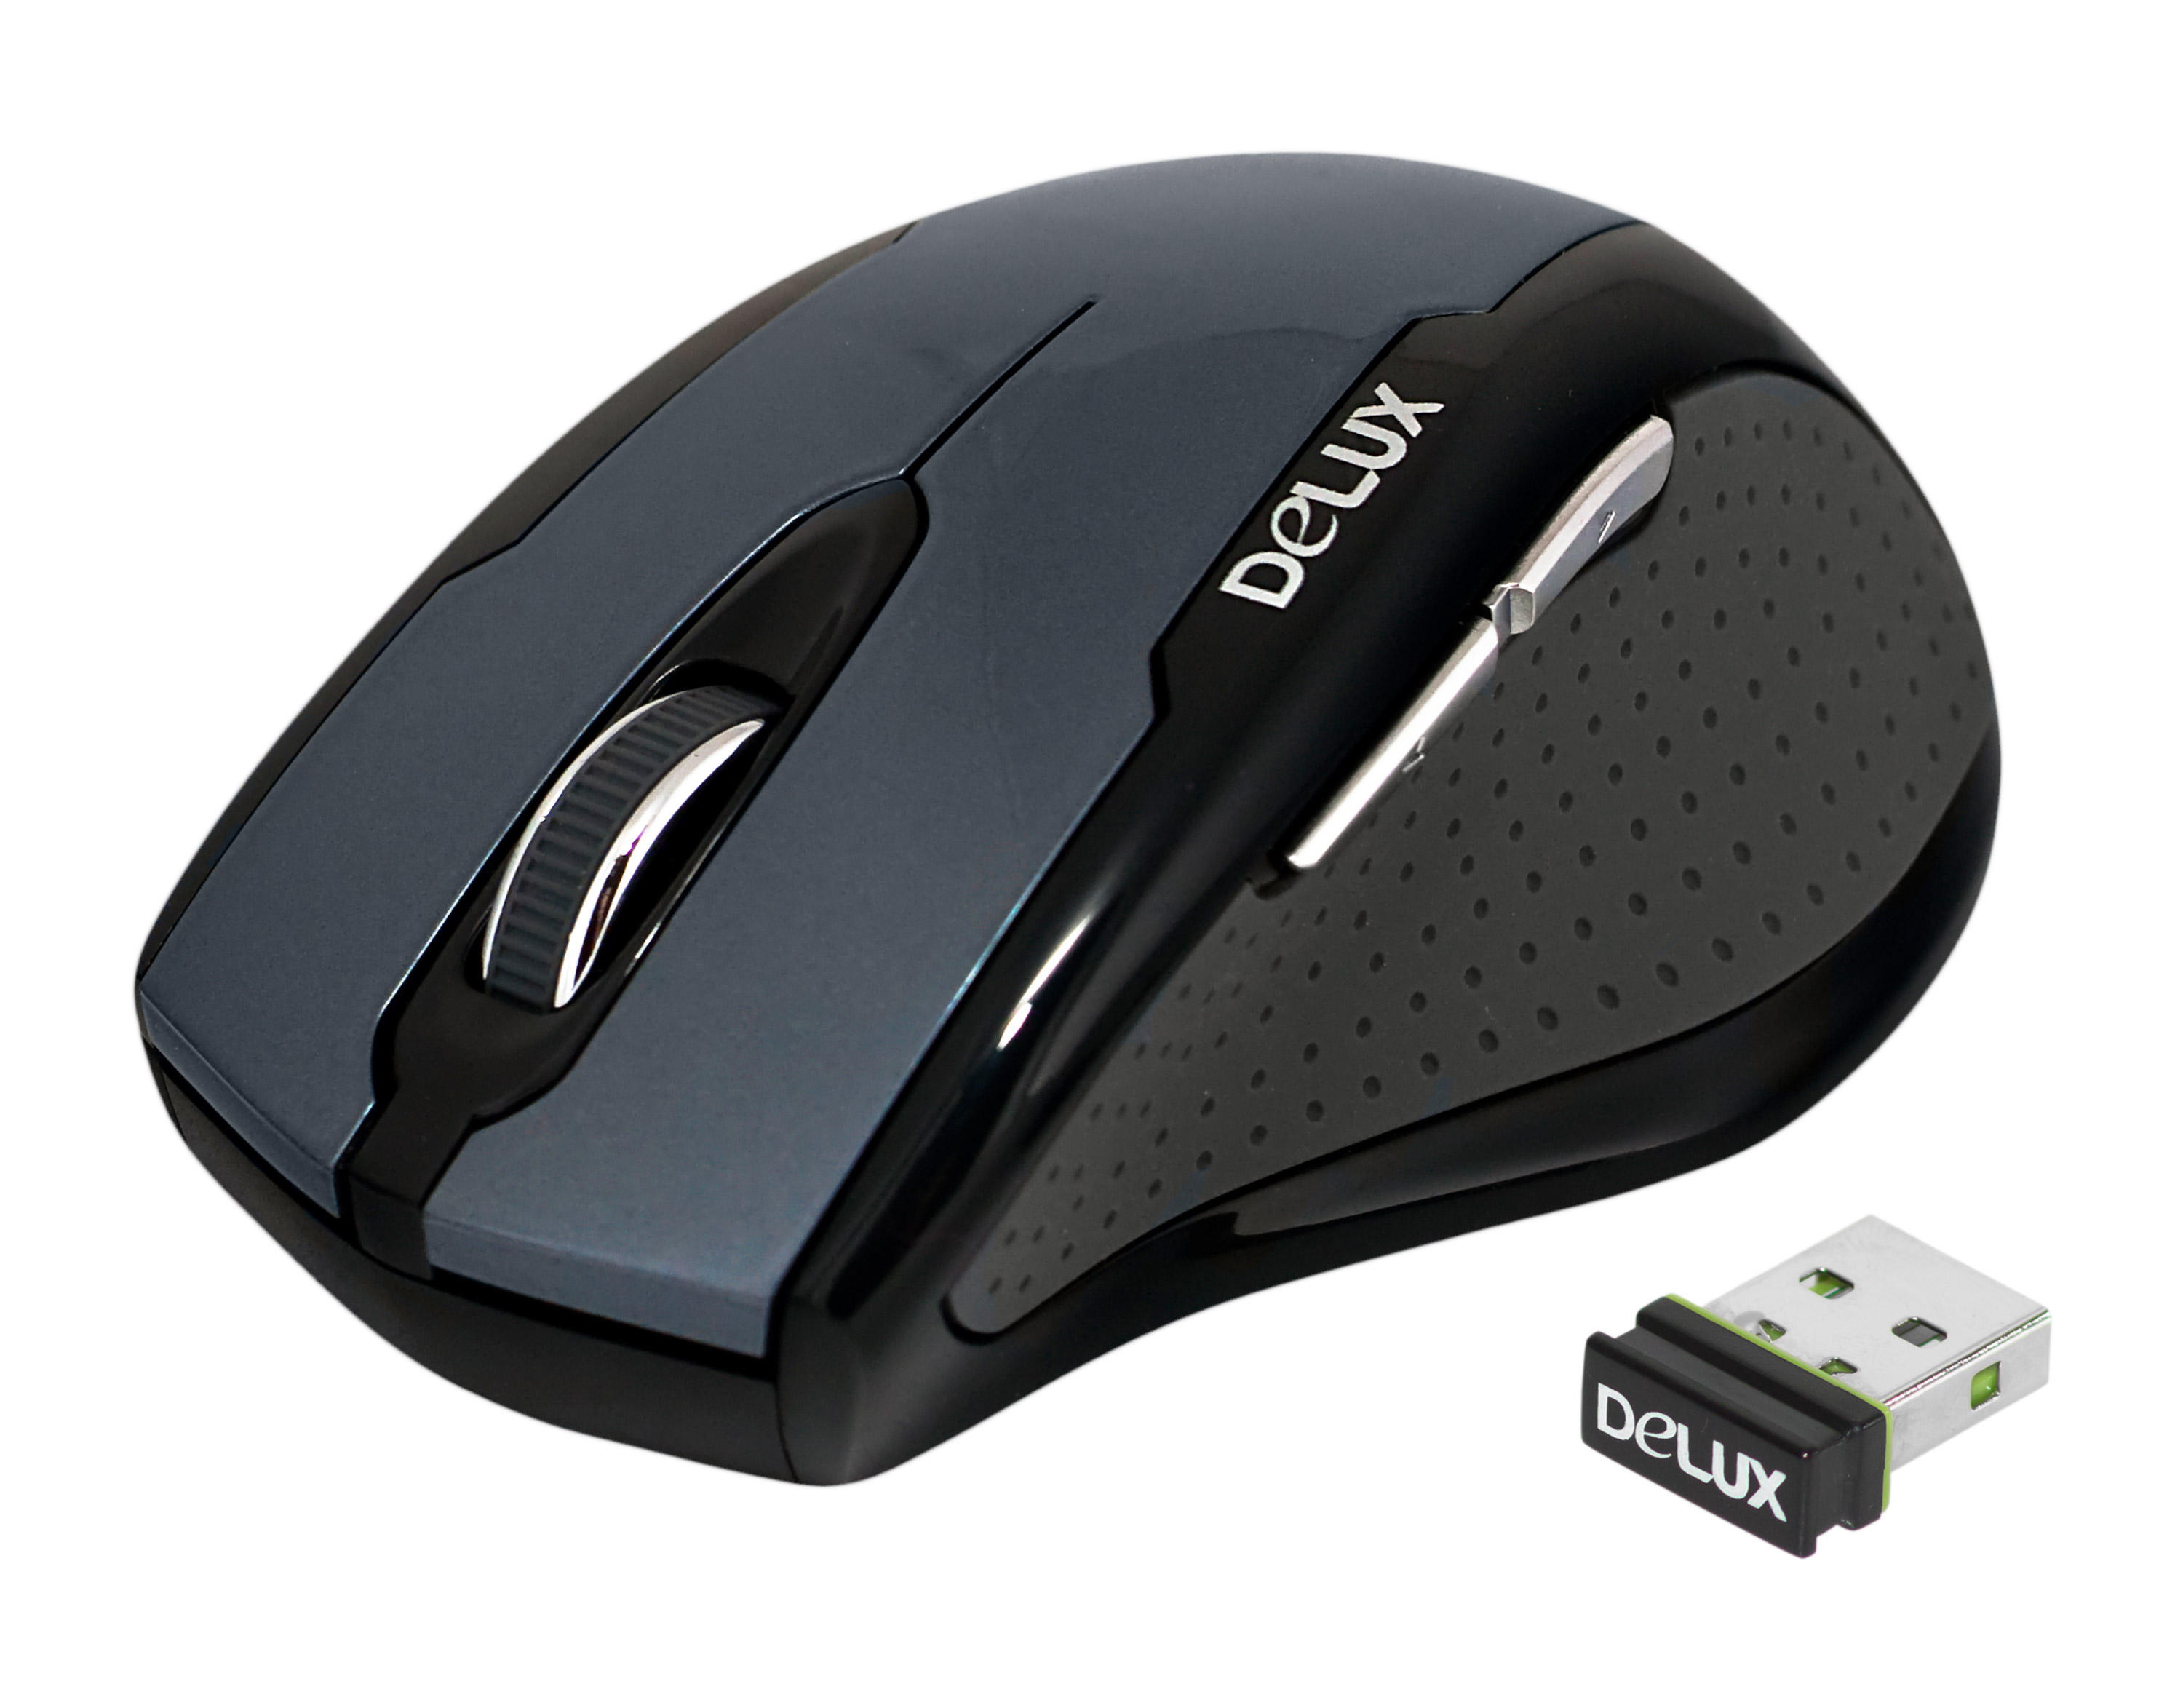 Беспроводные мыши москве. Беспроводная мышка Delux g15. Mouse Delux dlm-486gl+g01uf Wireless. Mouse Delux dlm-125 USB. Deluxe Mouse m516.